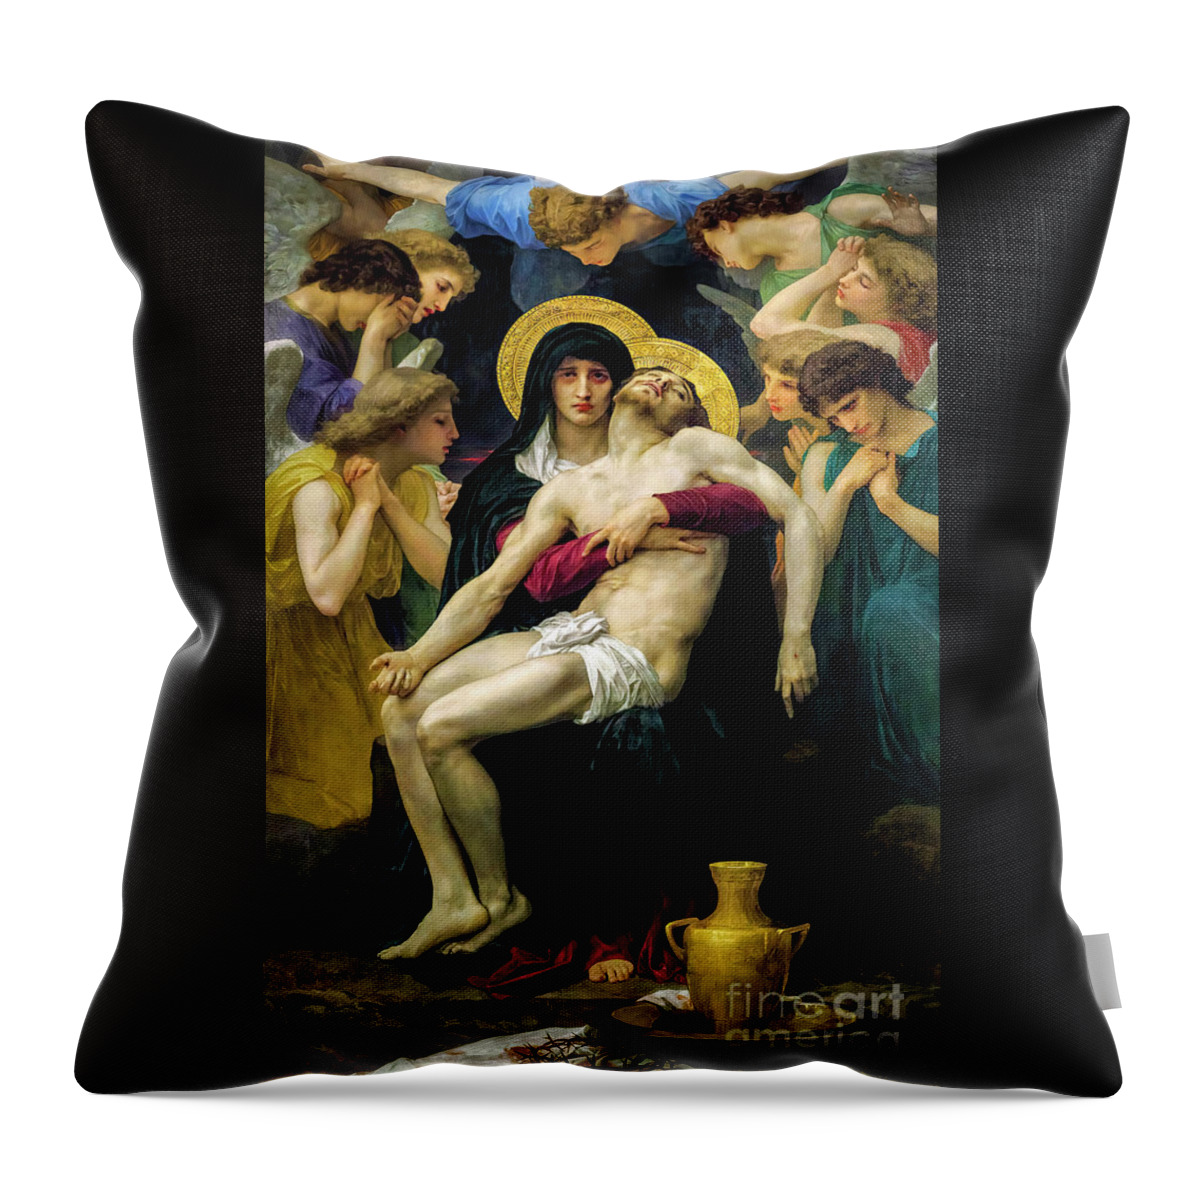 Pieta Throw Pillow featuring the photograph Pieta by William-Adolphe Bouguereau by Carlos Diaz